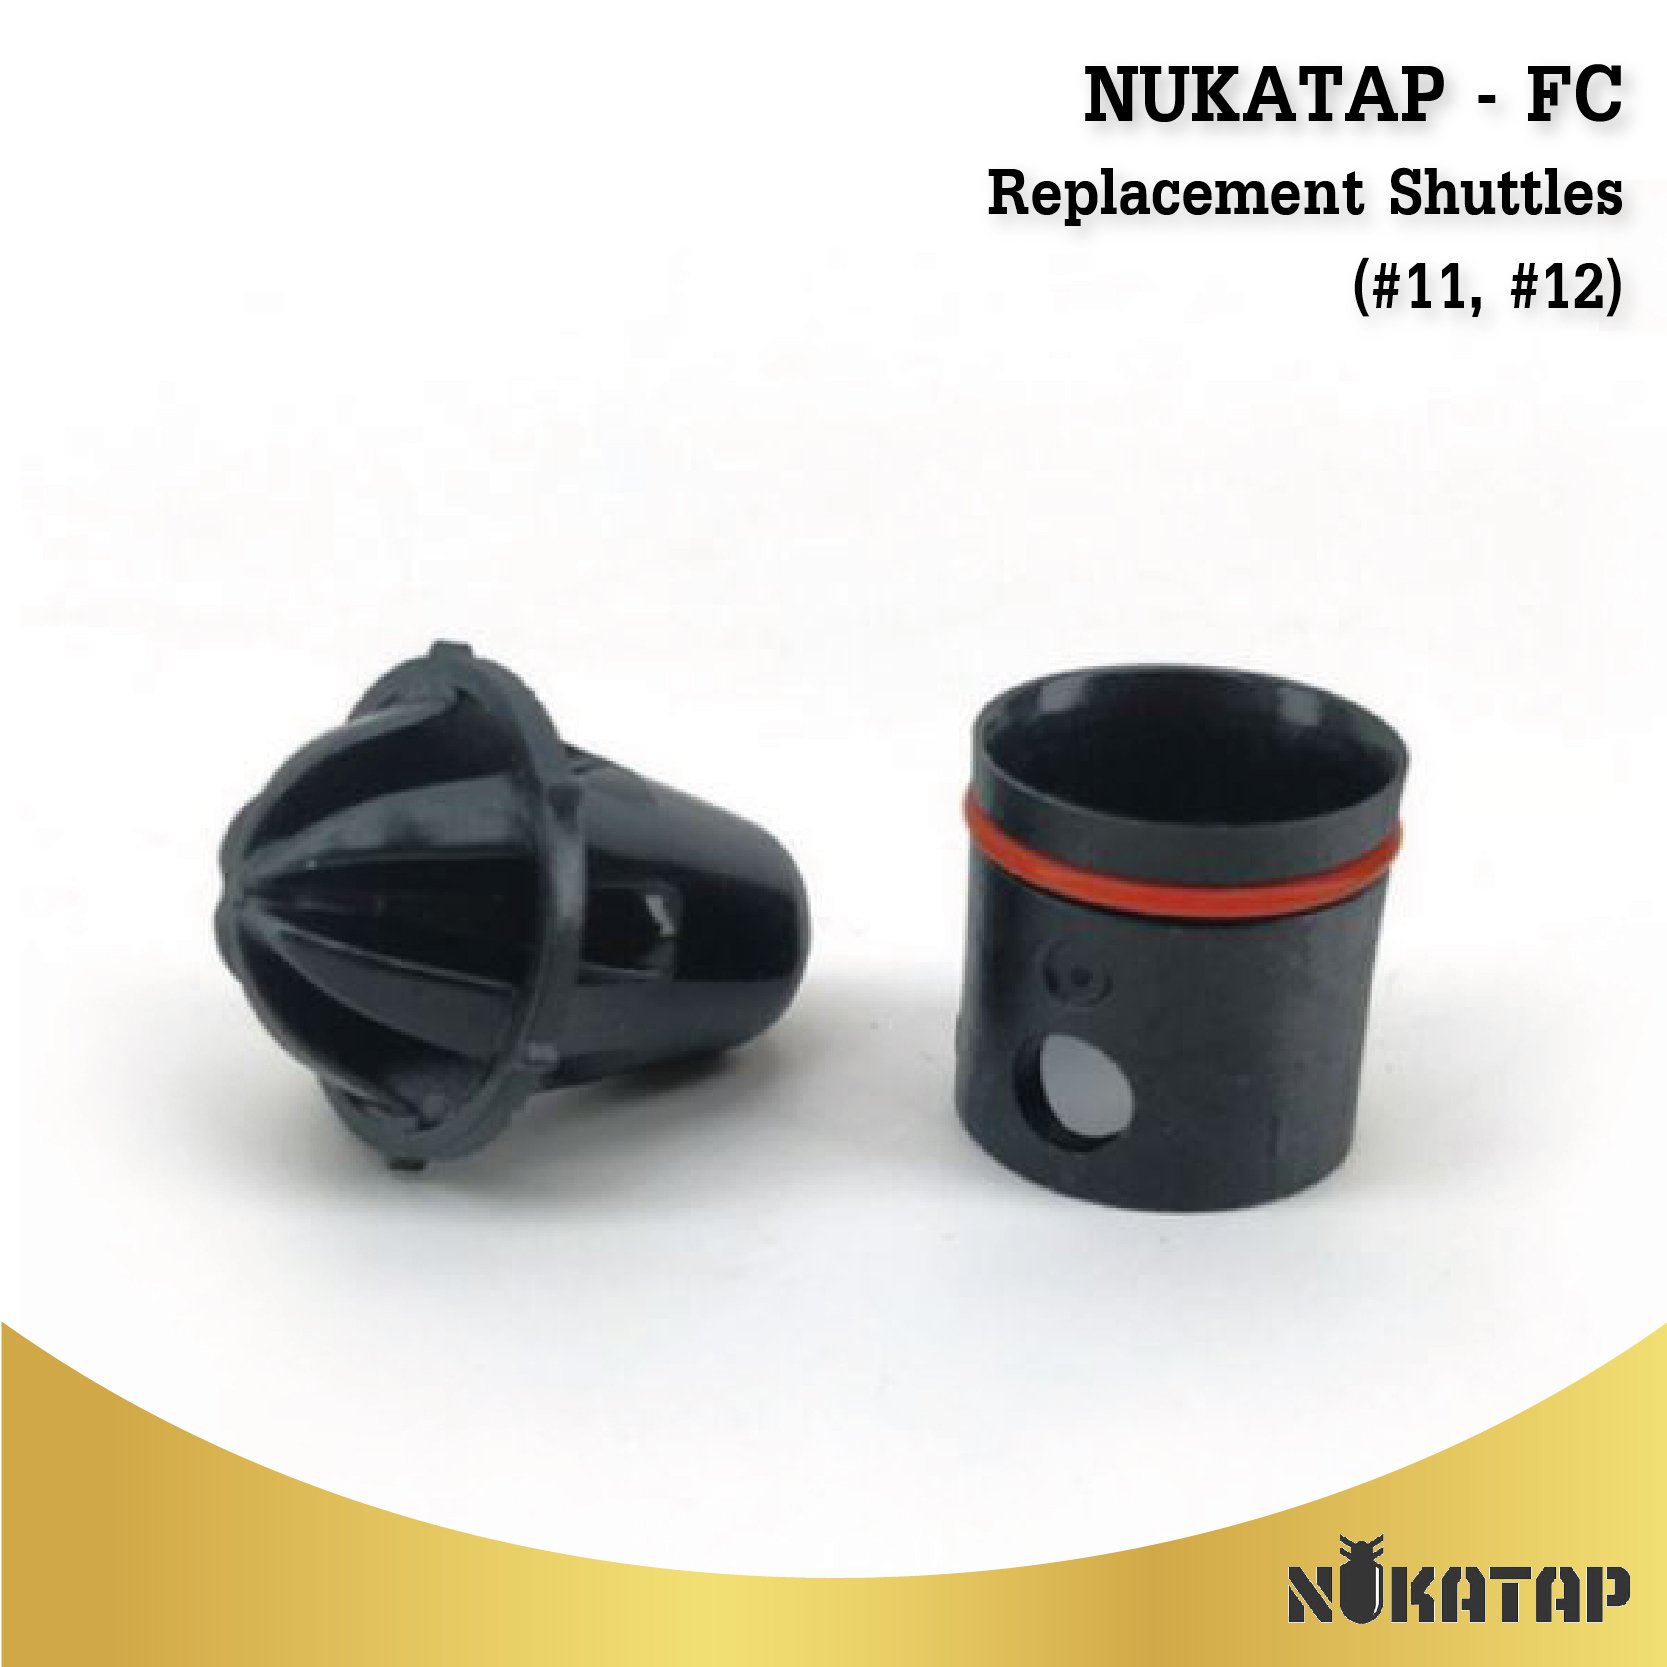 NUKATAP - FC - Replacement Shuttles (#11, #12)